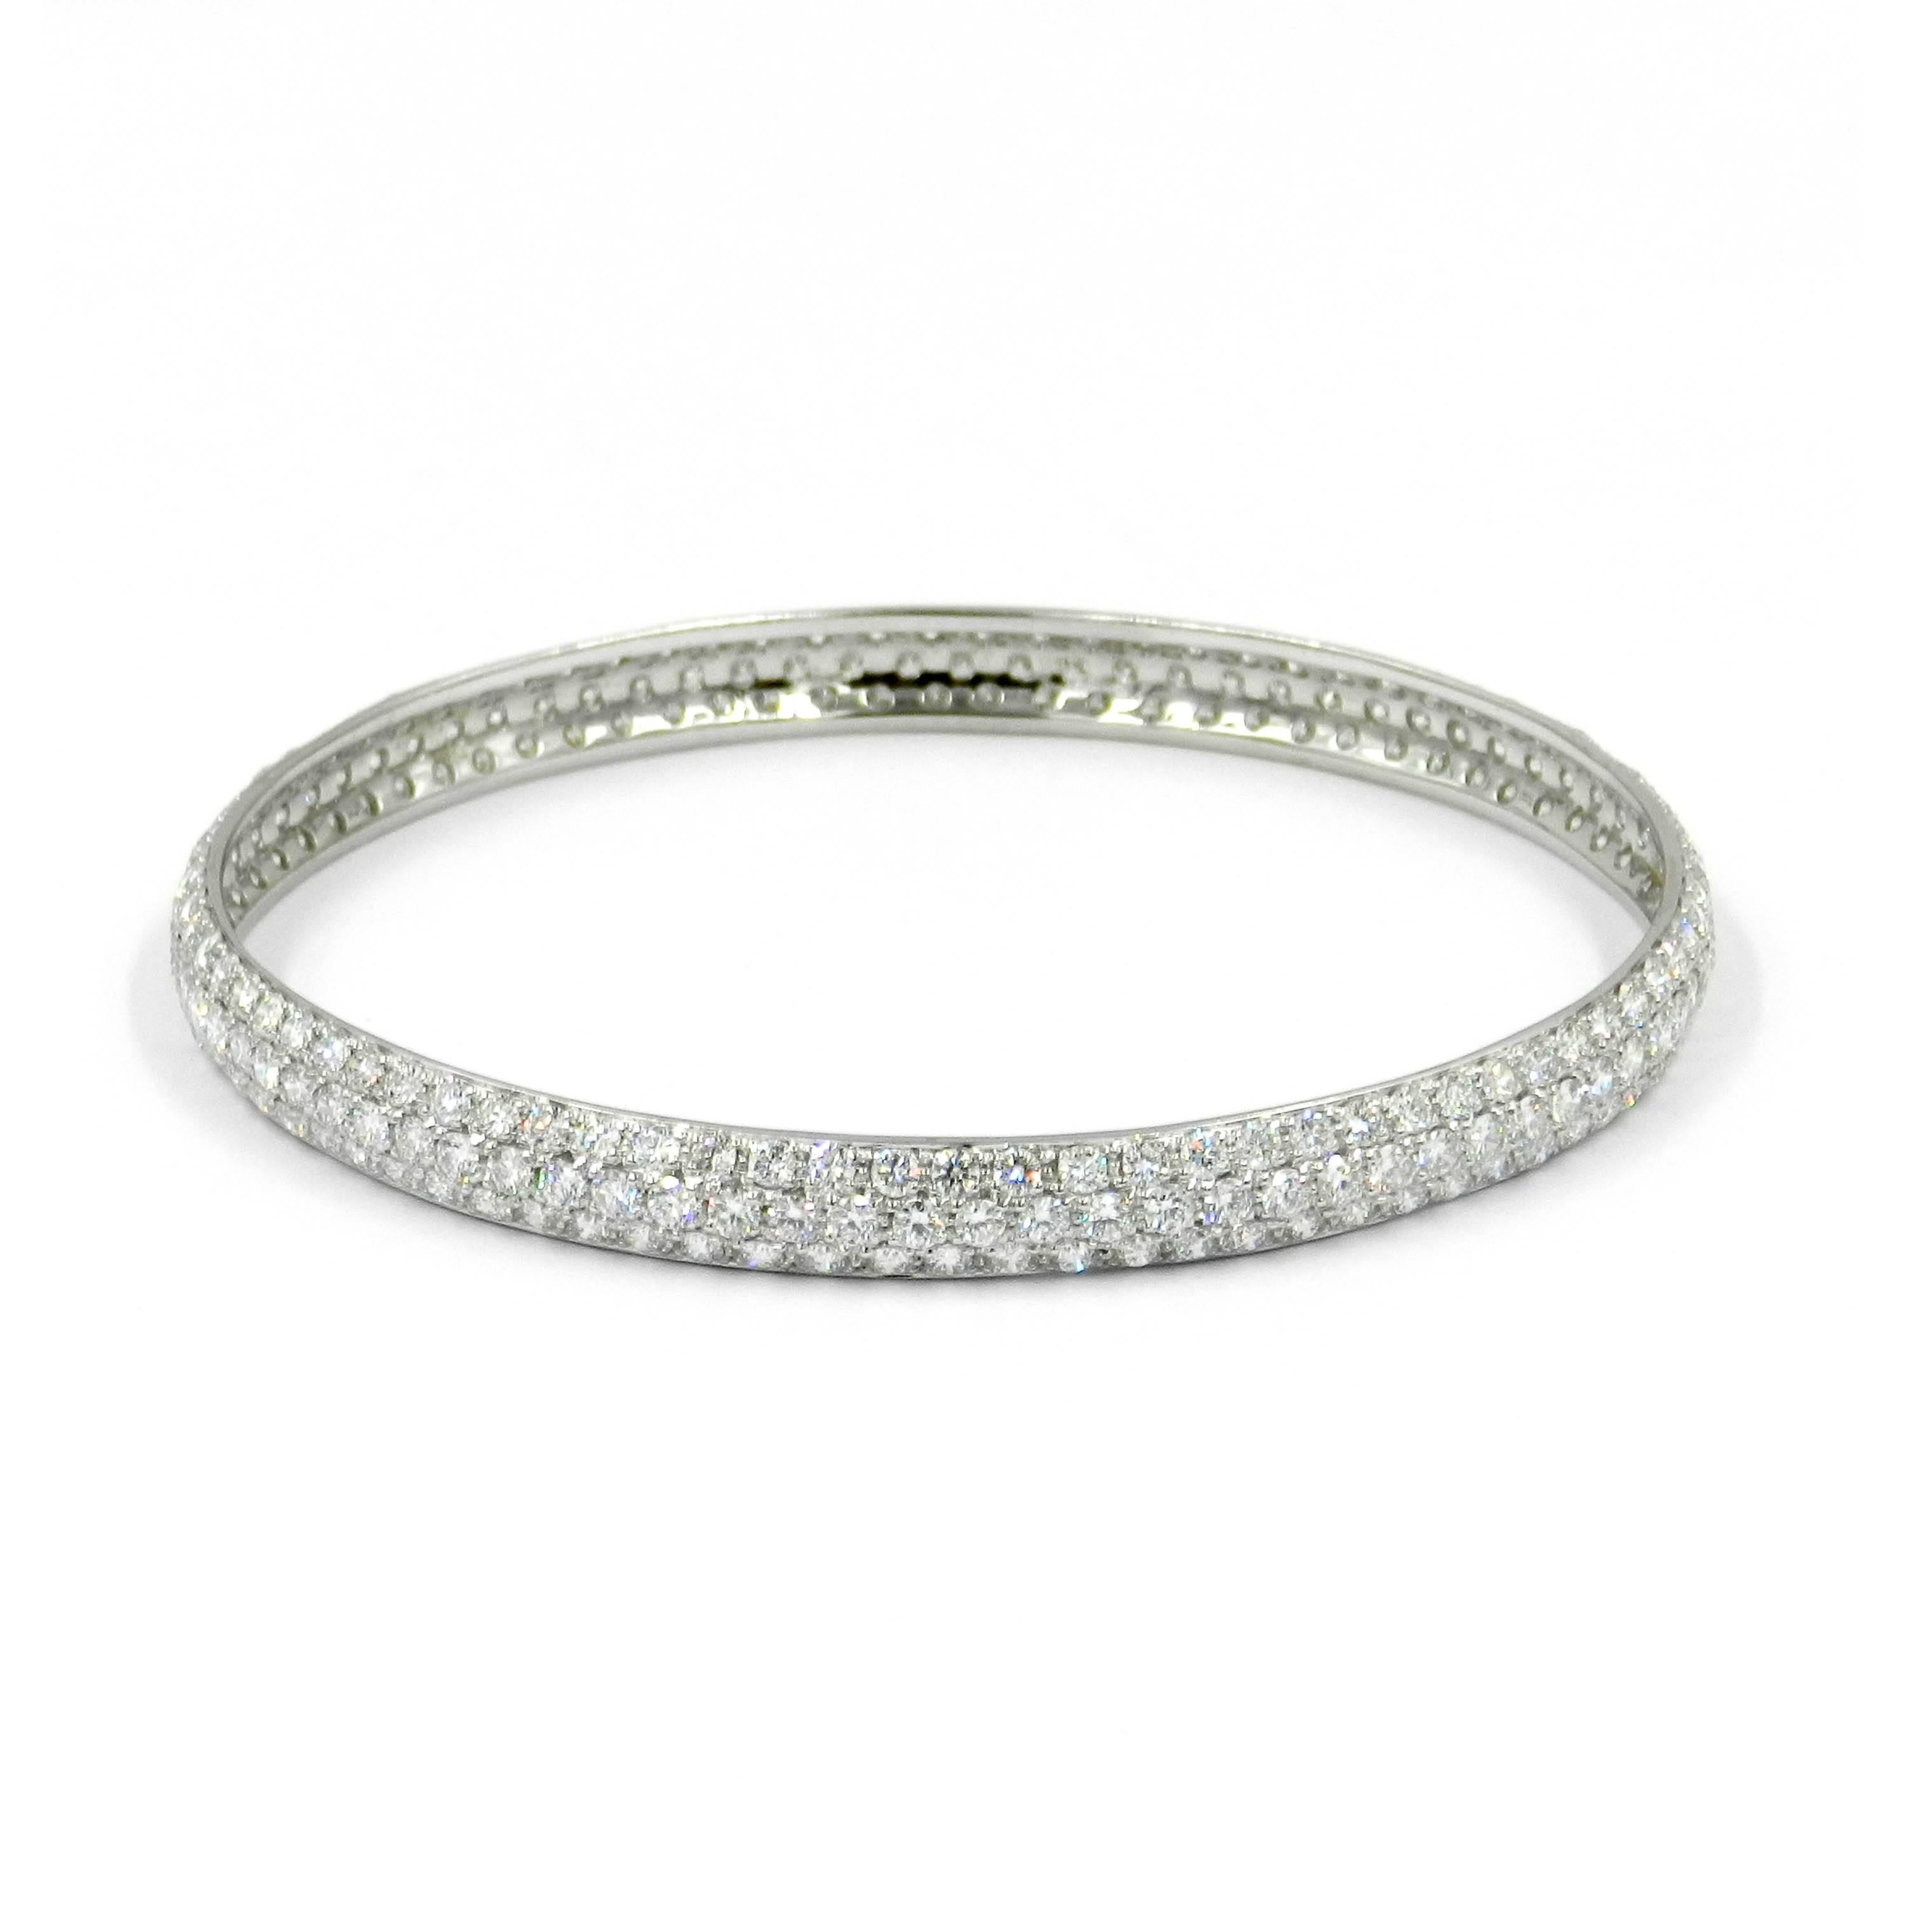 Round Cut 18 Karat White Gold Three Rows of White Diamonds Pavè Garavelli Bangle Bracelet For Sale